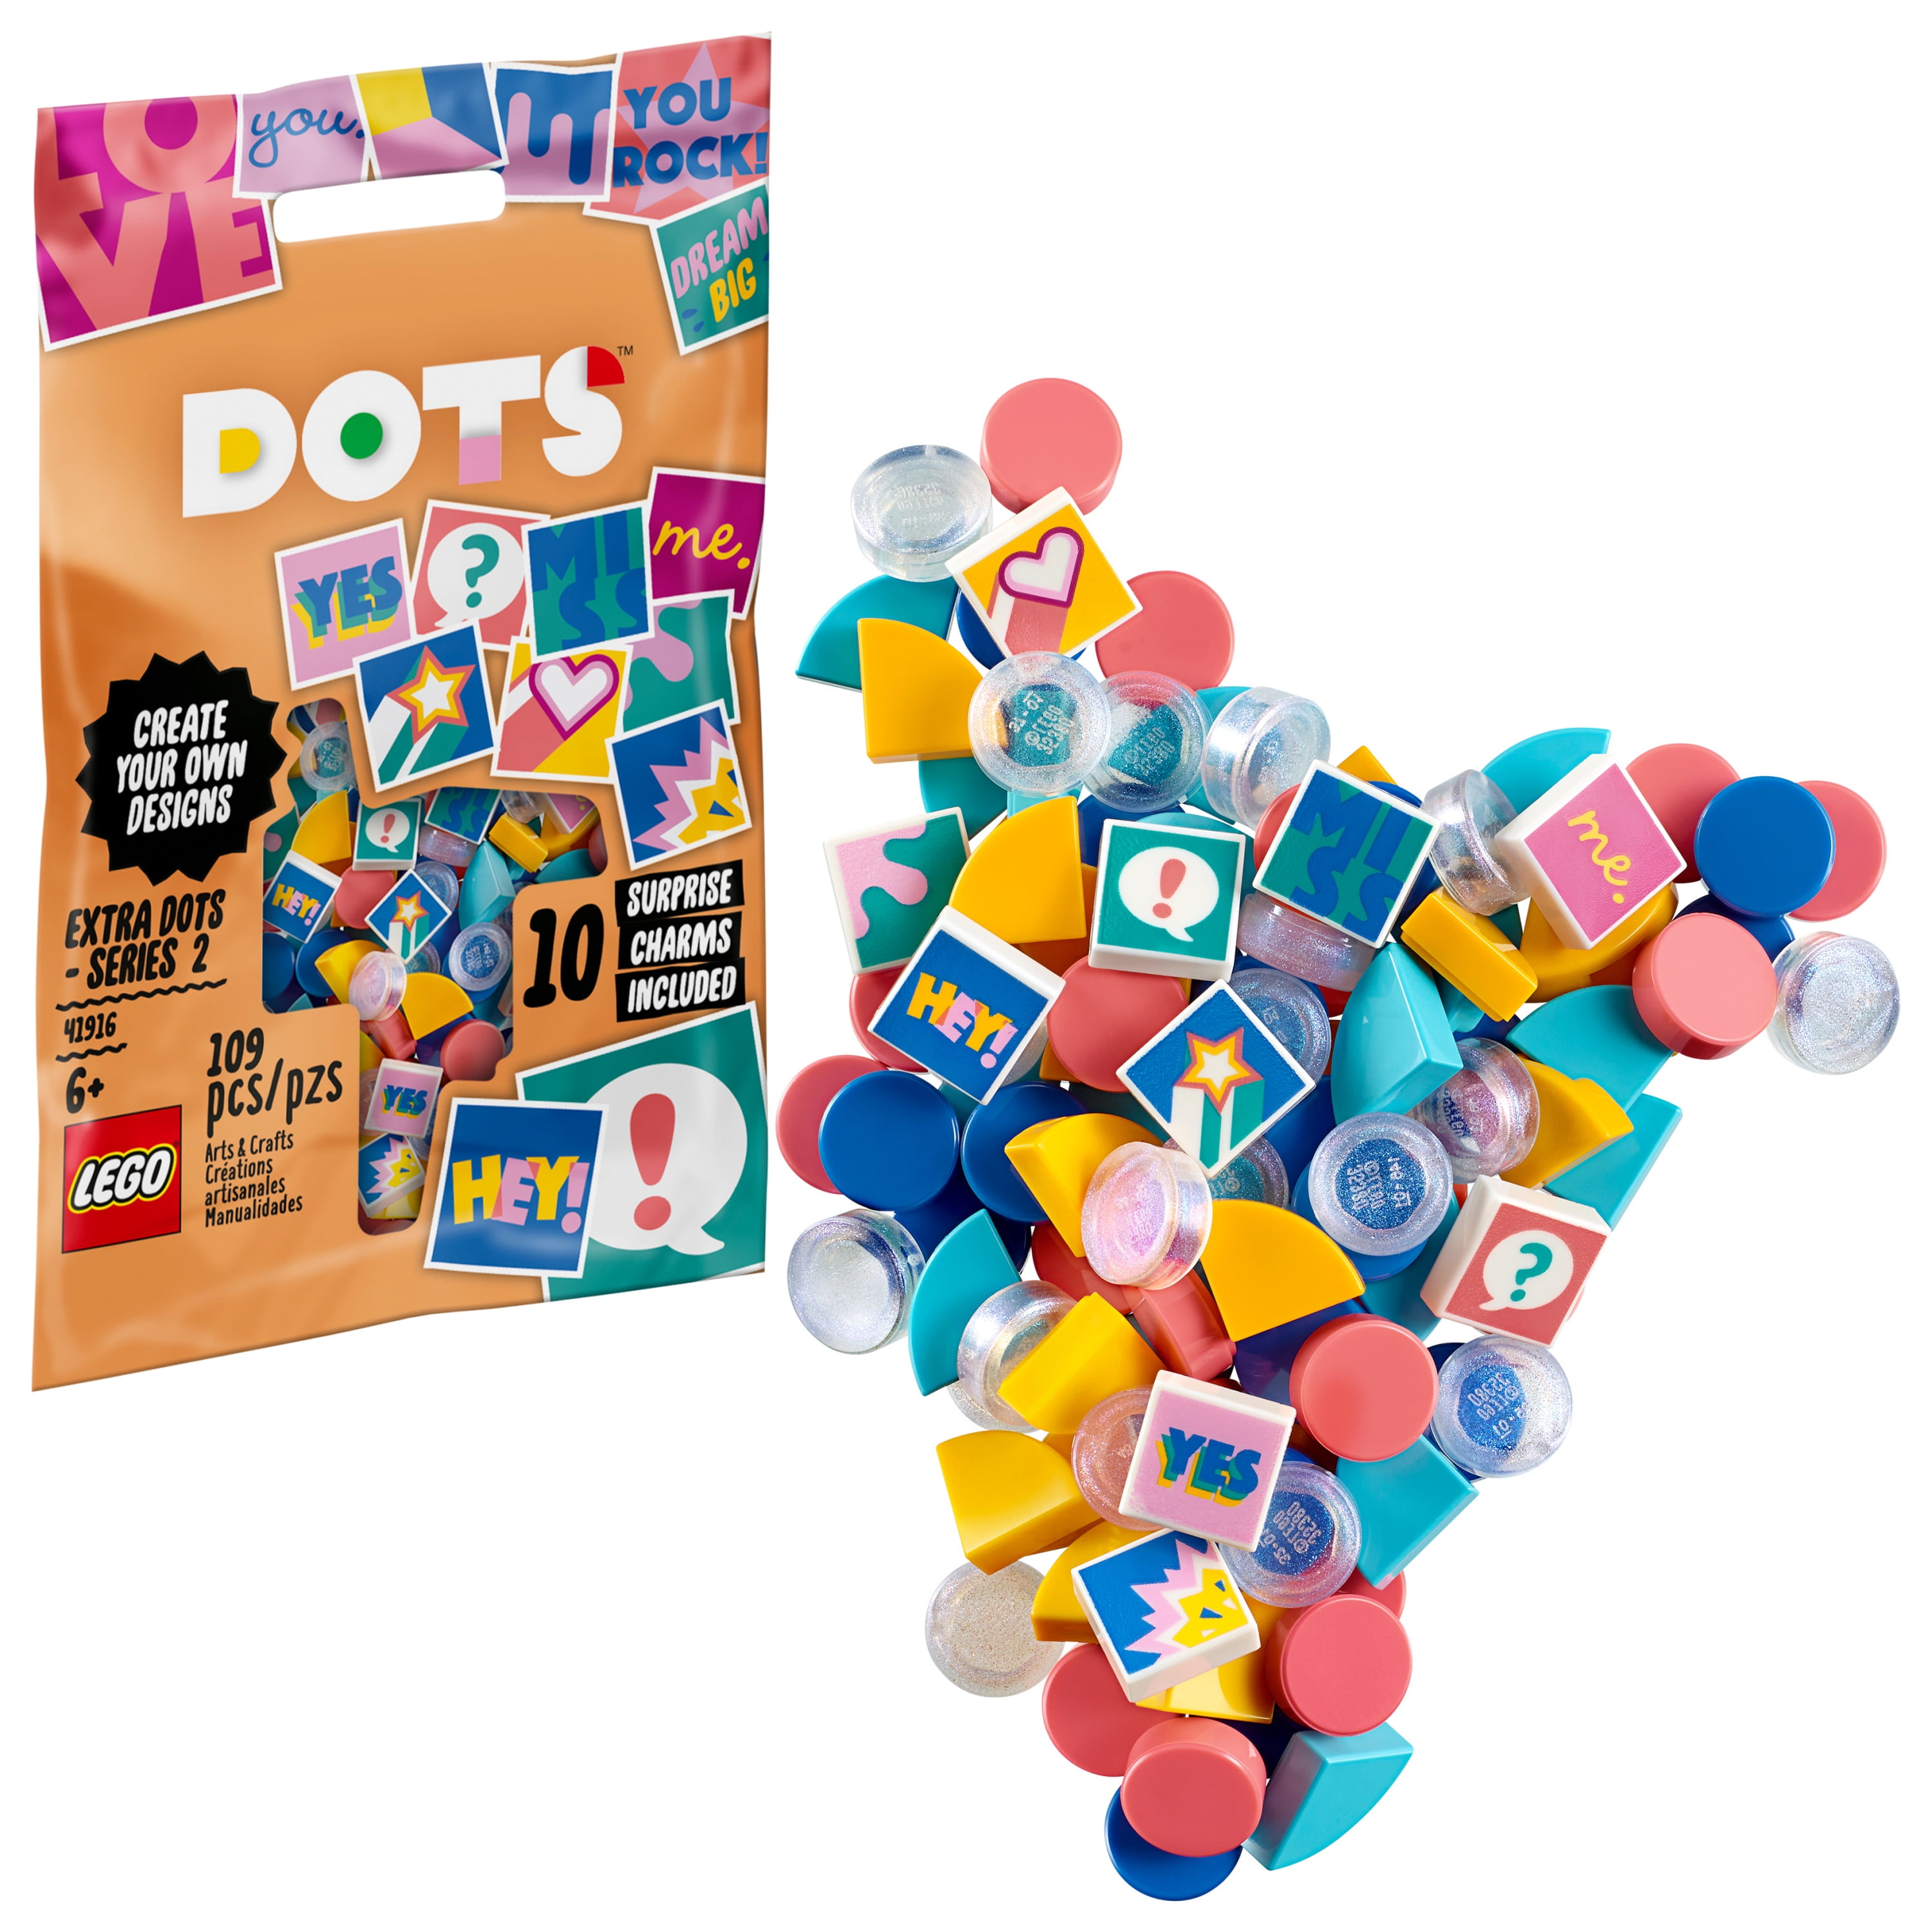 LEGO DOTS Extra DOTS Series 7 – SPORT 41958 DIY Decoration Kit